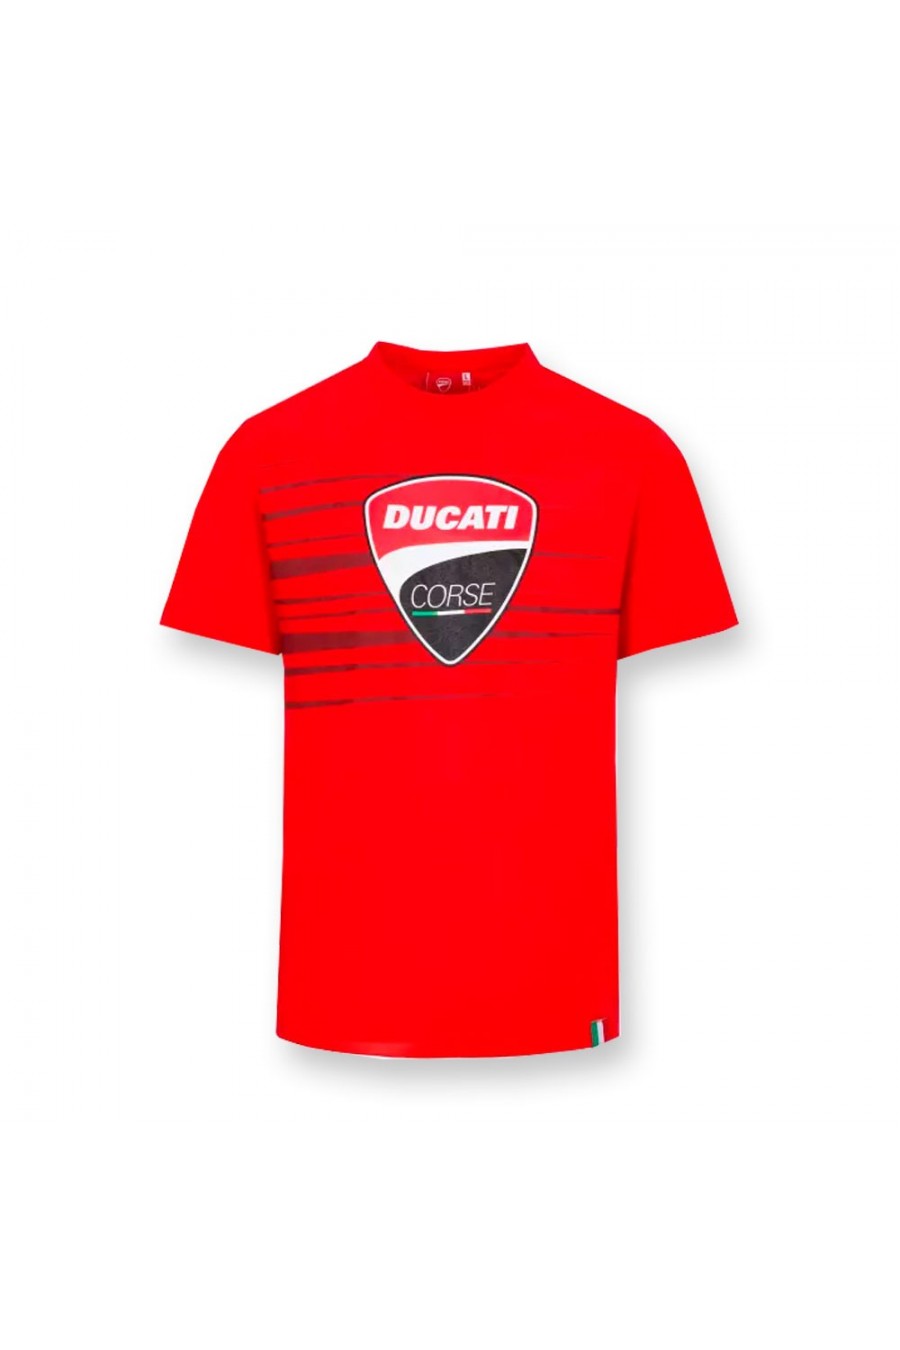 T-shirt Ducati Corse